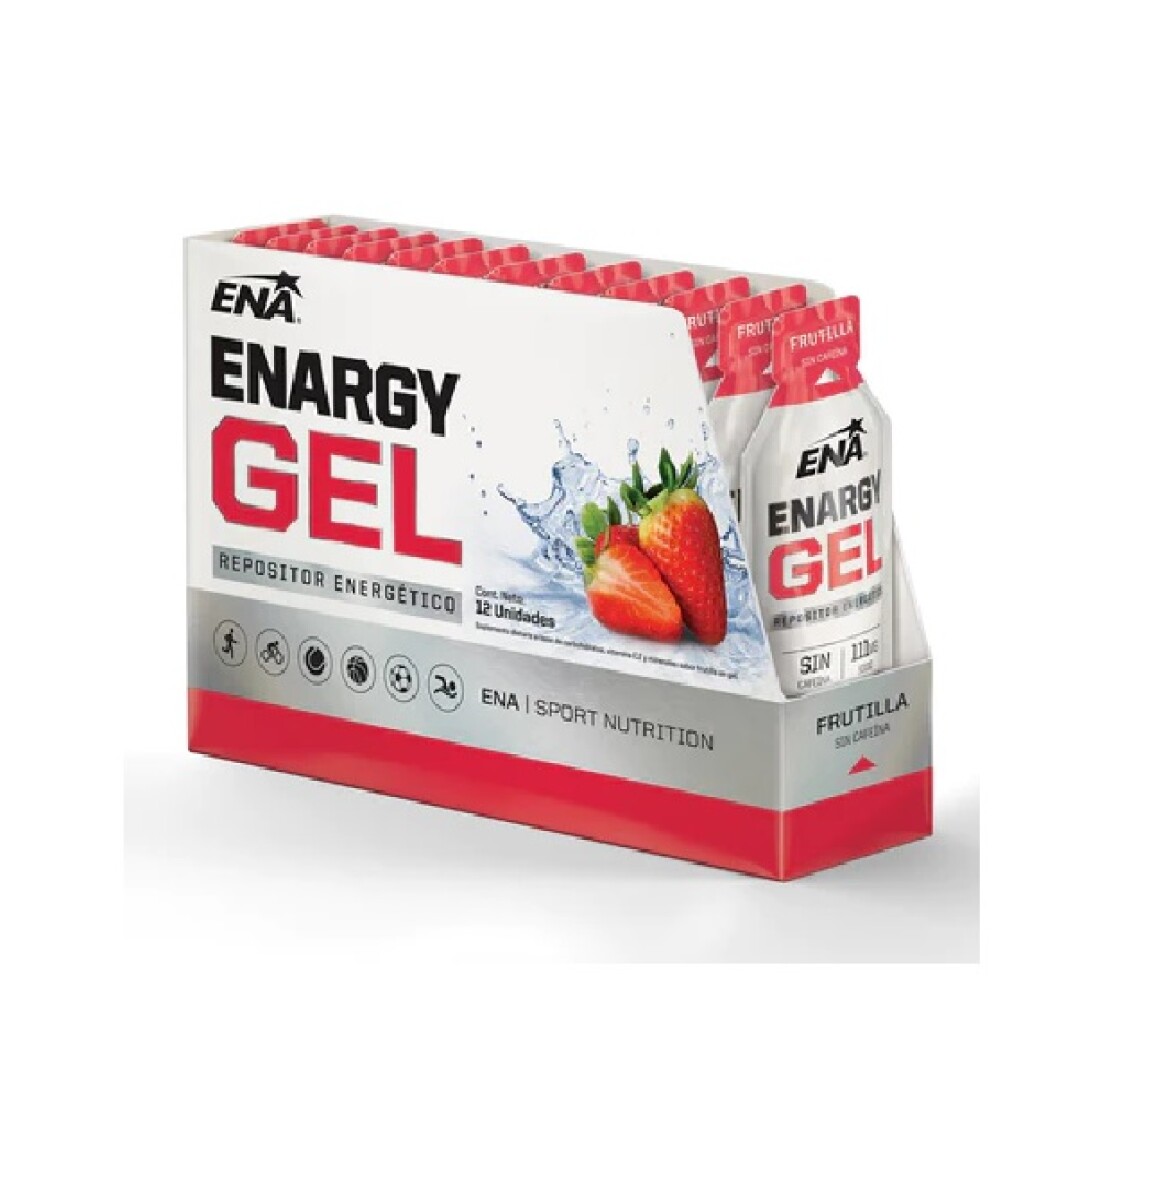 ENA Energy Gel 32g Caja x 12 unidades - Frutilla 